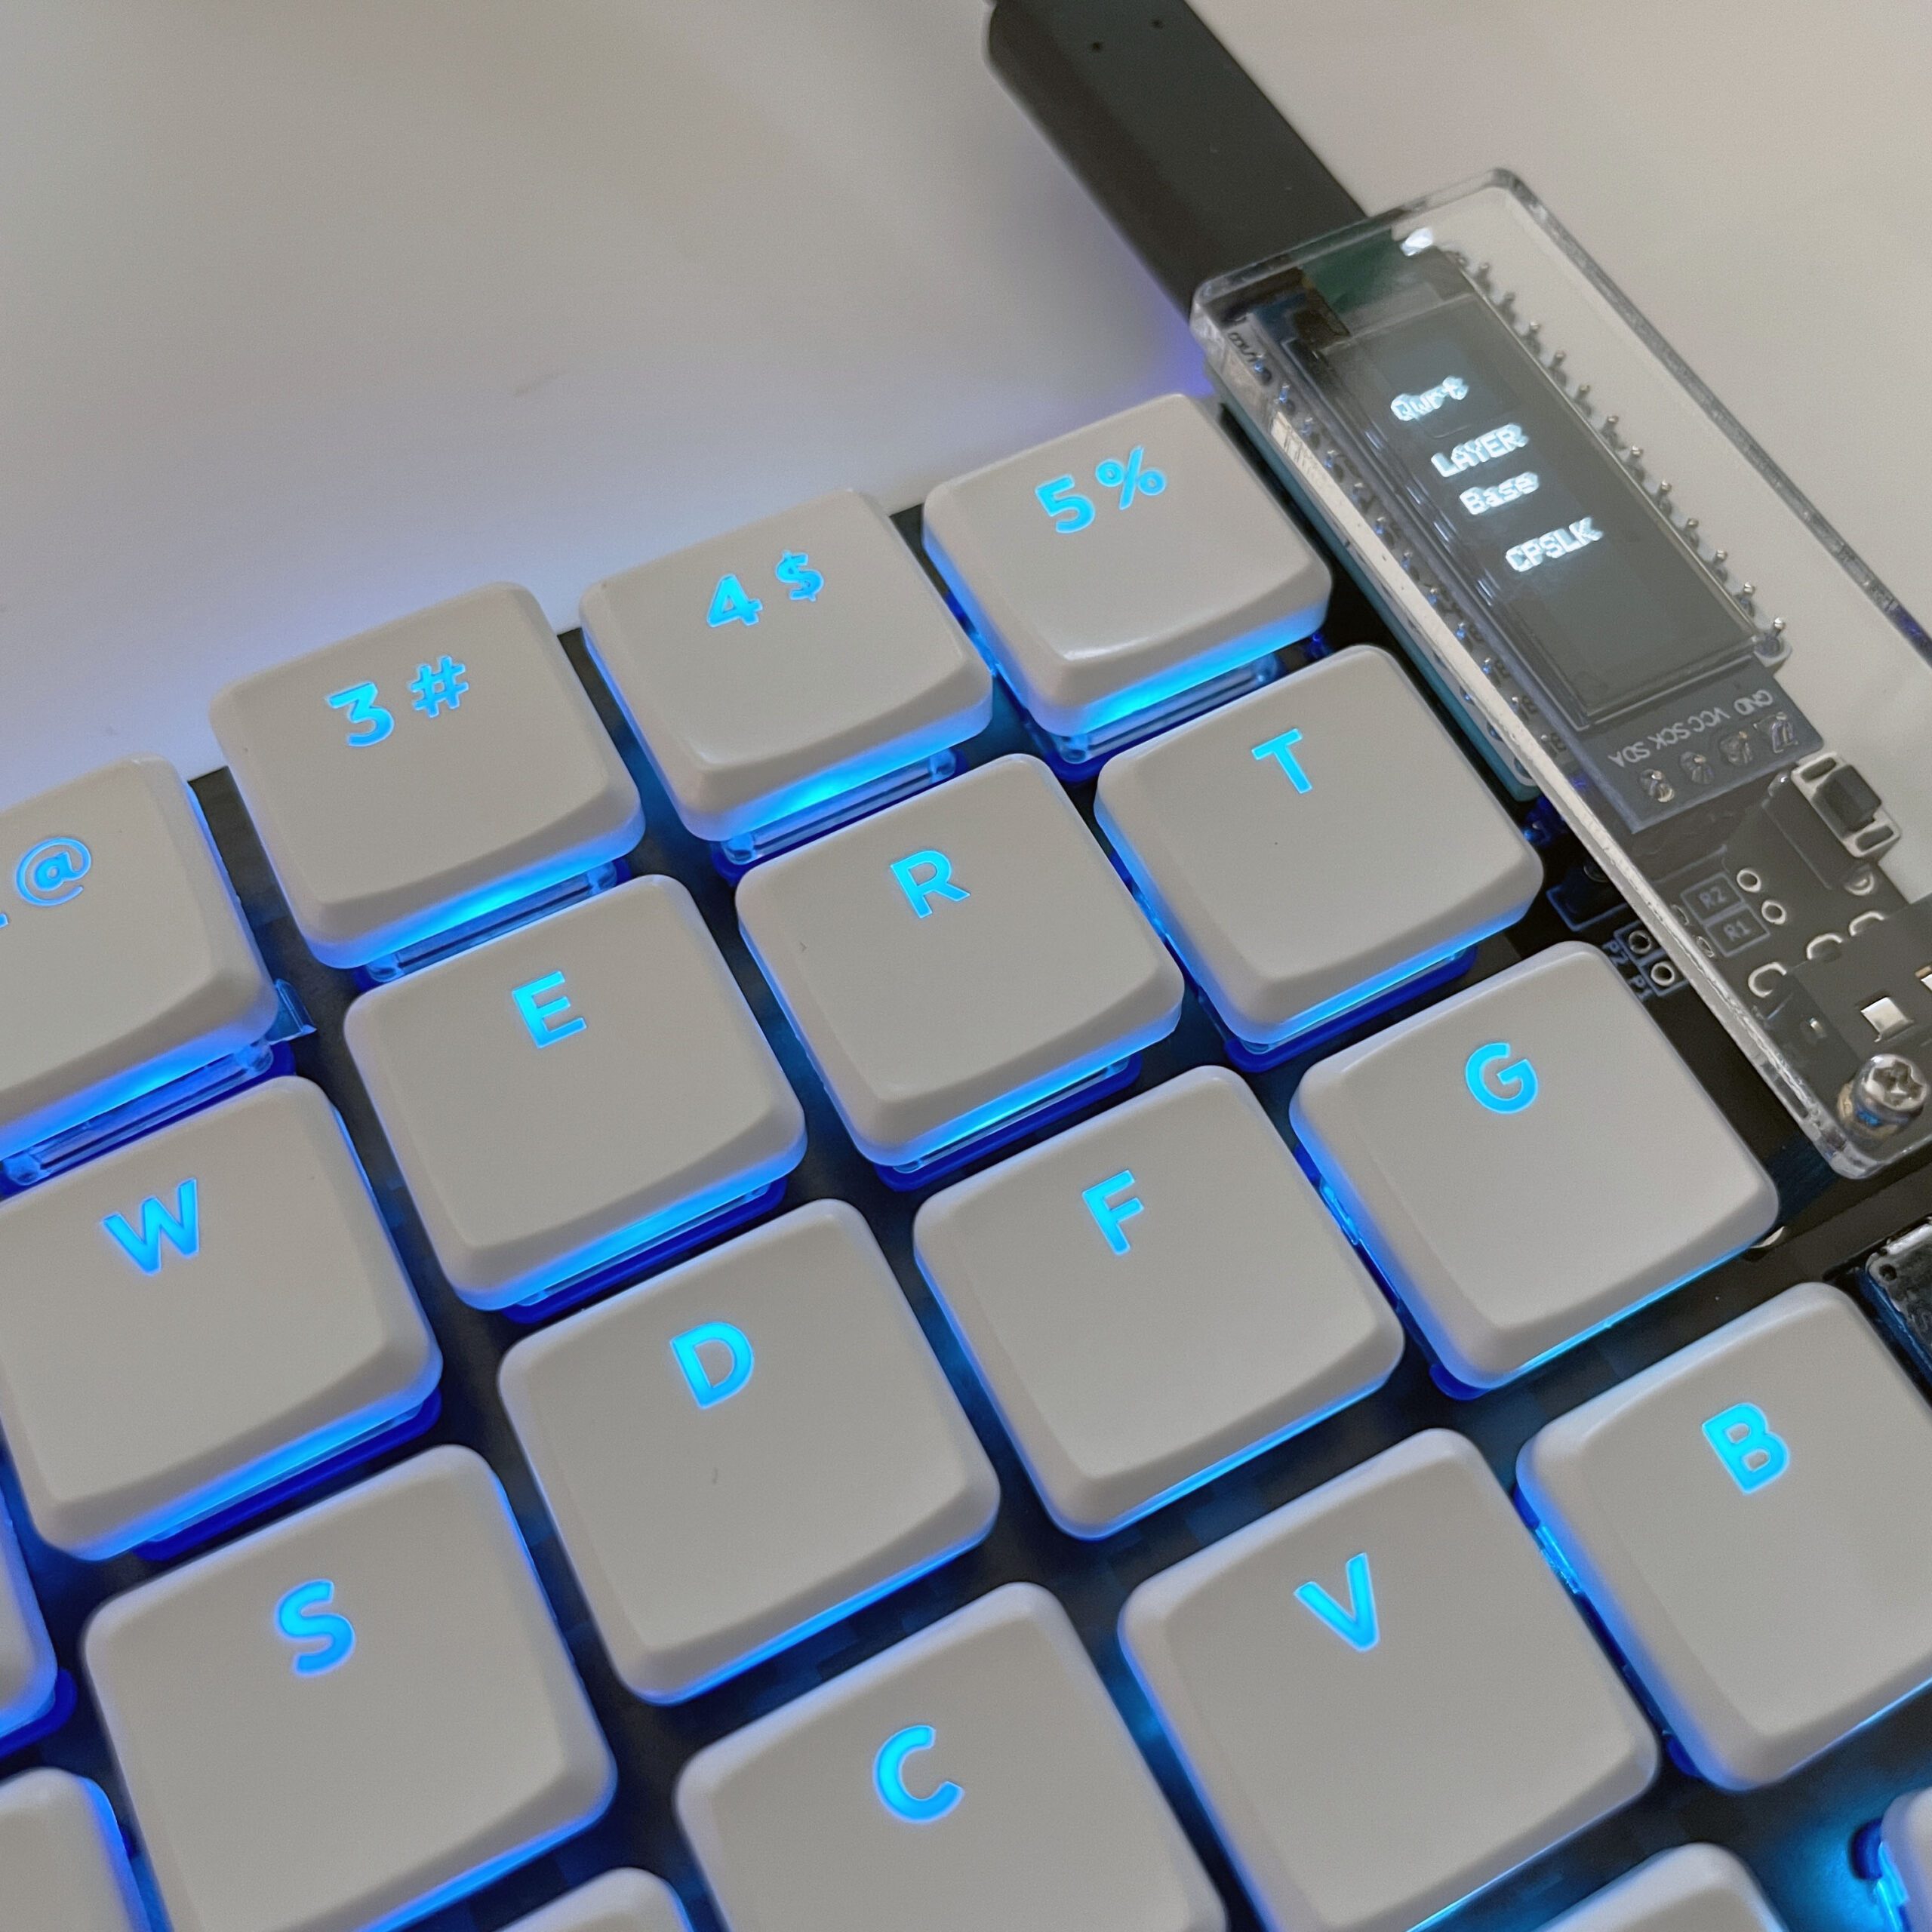 MBK Legend‡ Glow R2 White Keycap Set with Keycap Puller demo